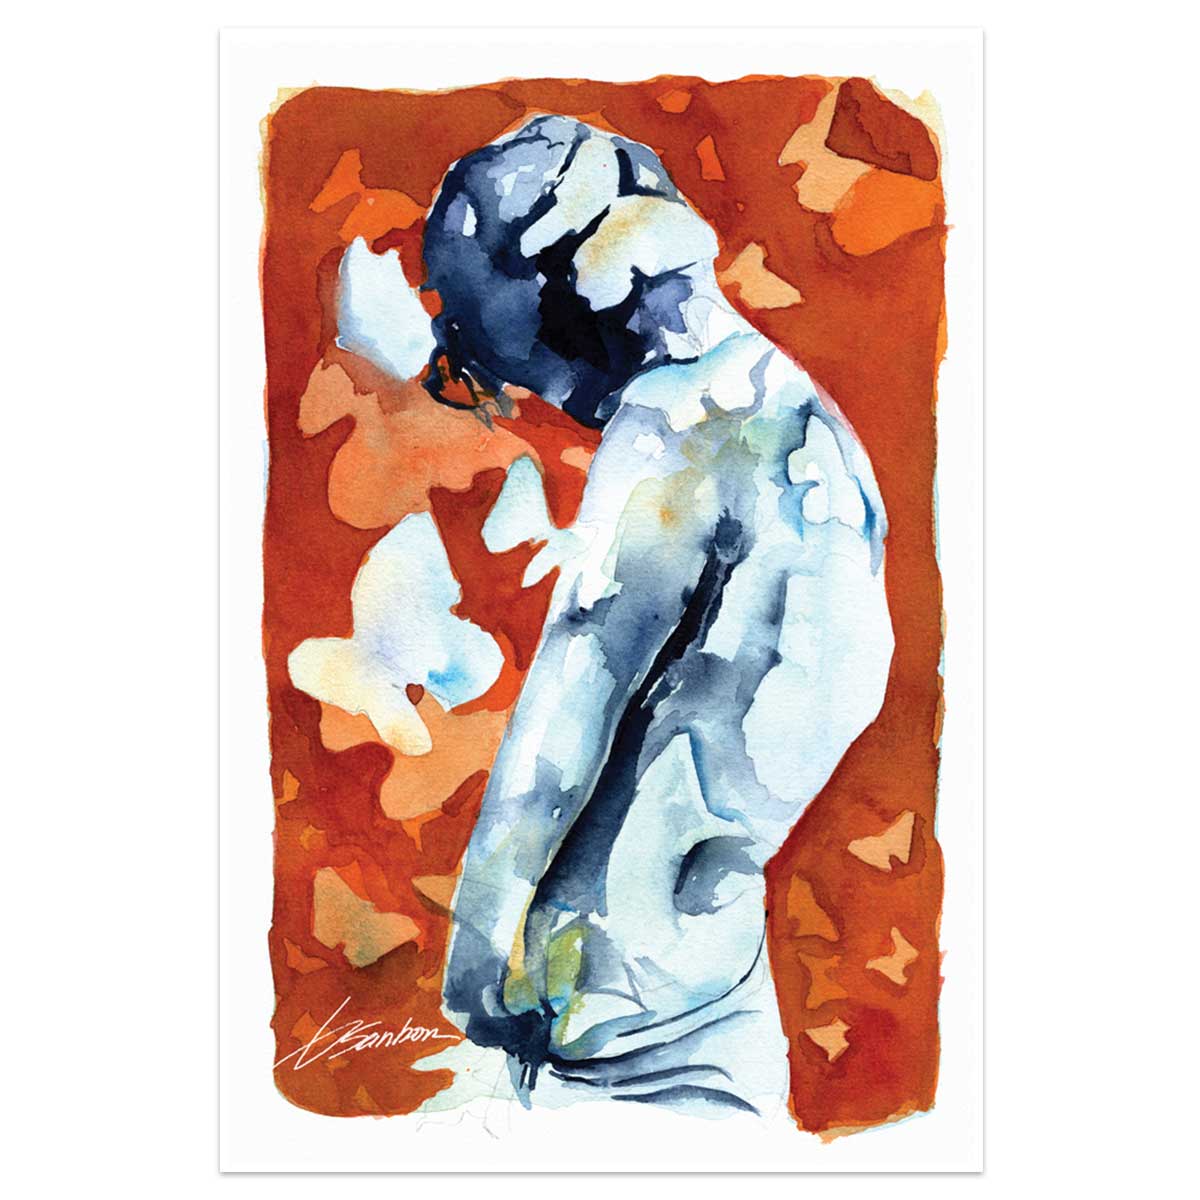 Sexy Shirtless Young Man Among Butterflies - 6x9" Original Watercolor Painting